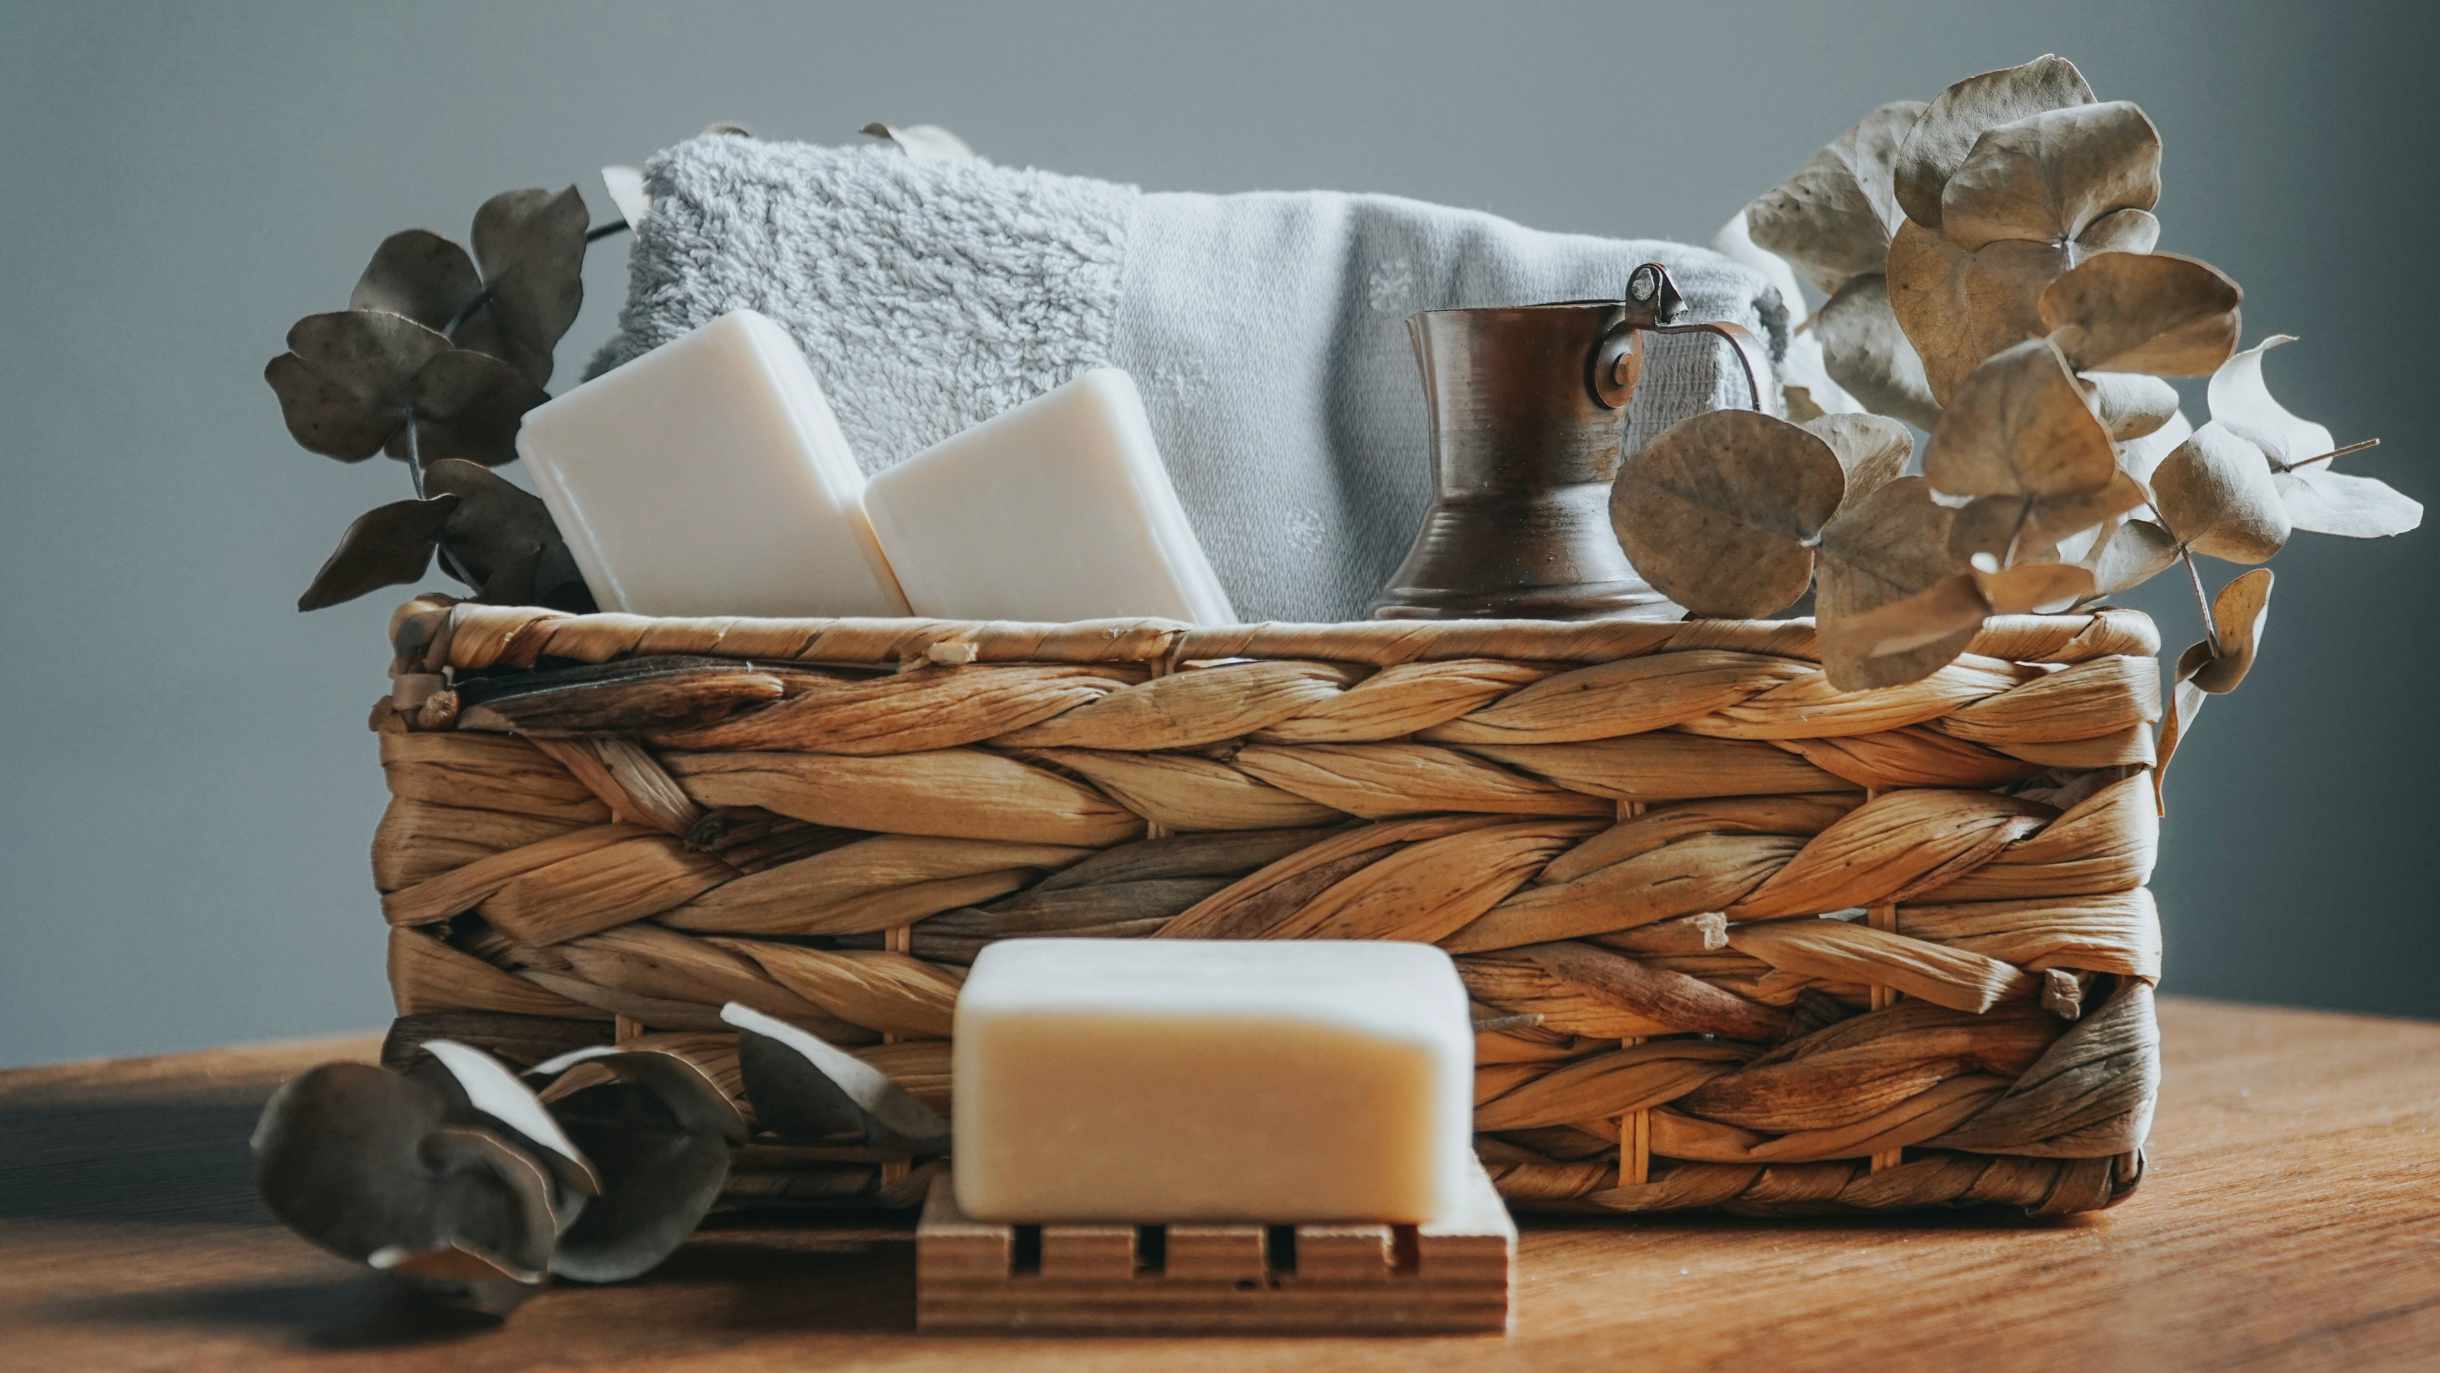 Image: Homemade soap